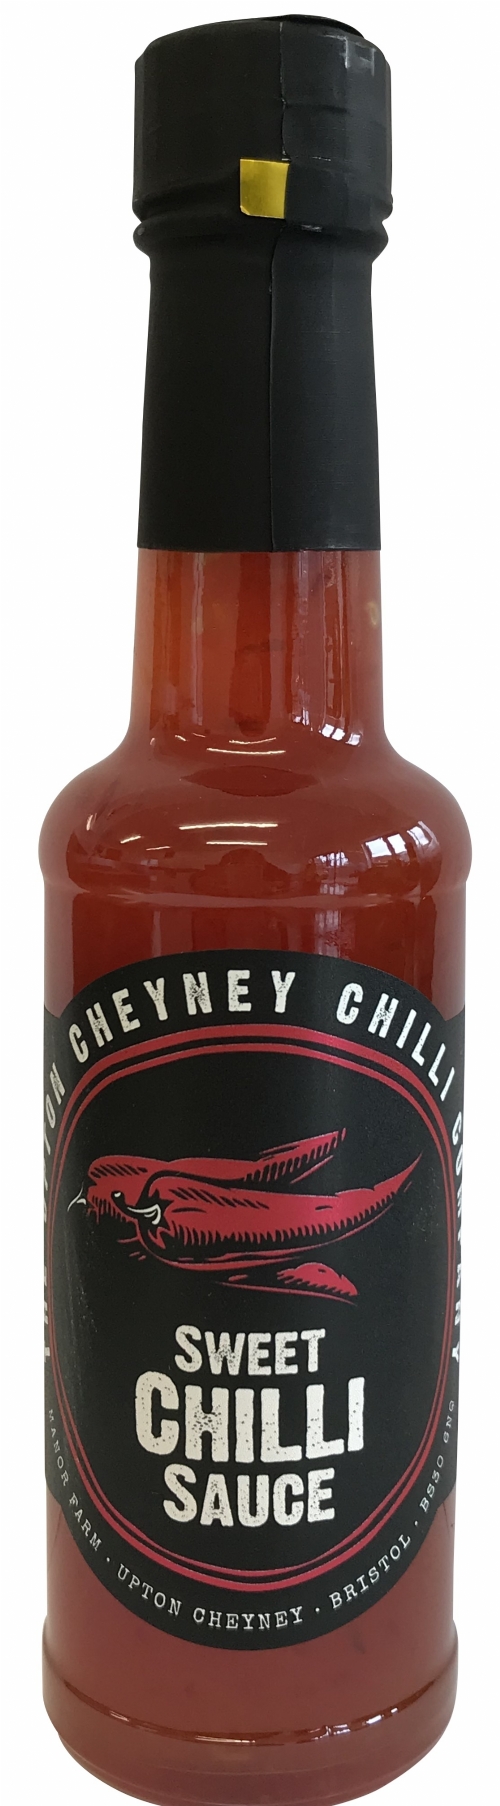 UPTON CHEYNEY CHILLI CO. Sweet Chilli Sauce 150ml